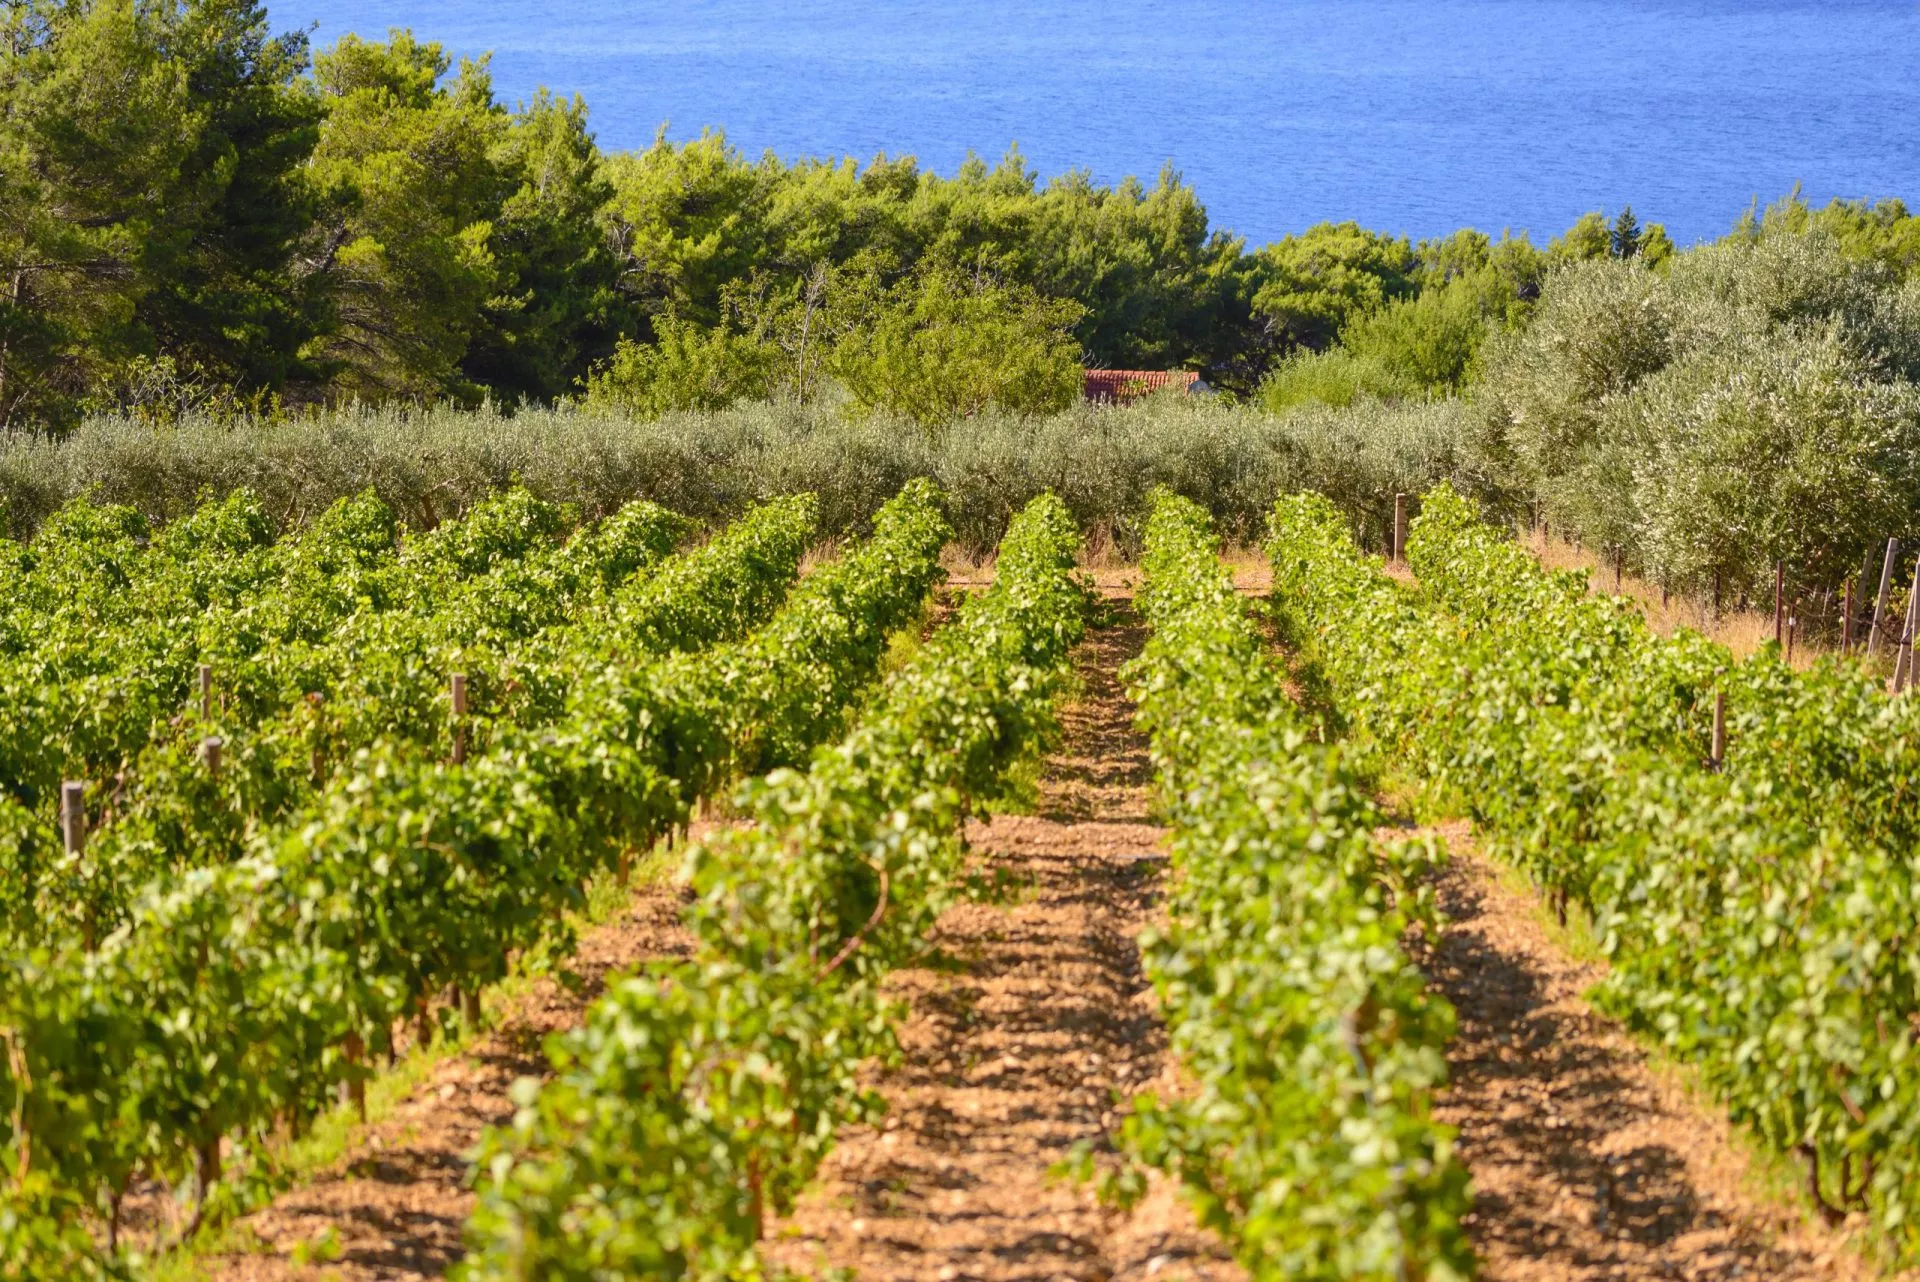 Korcula olives and vineyards